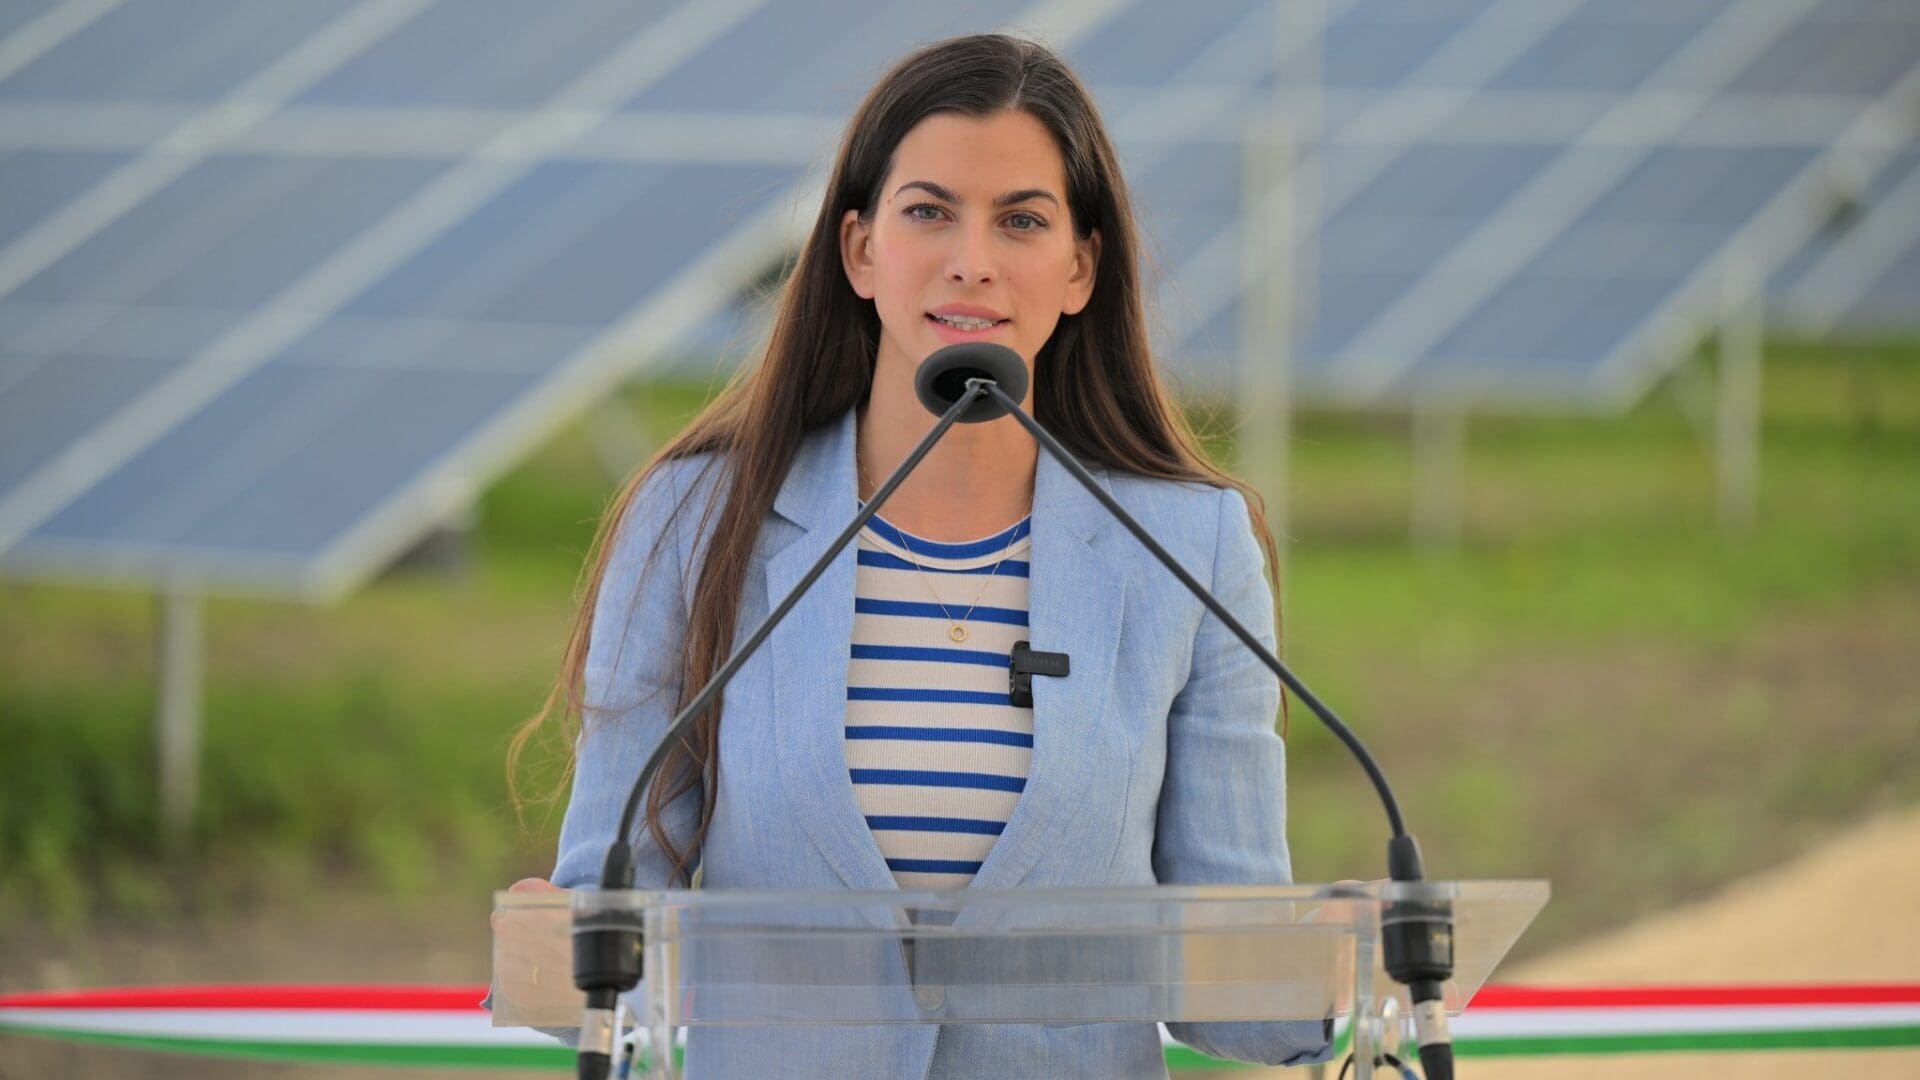 Government spokesperson Alexandra Szentkirályi speaking at the inauguration of the new MVM solar plant in Szeged.